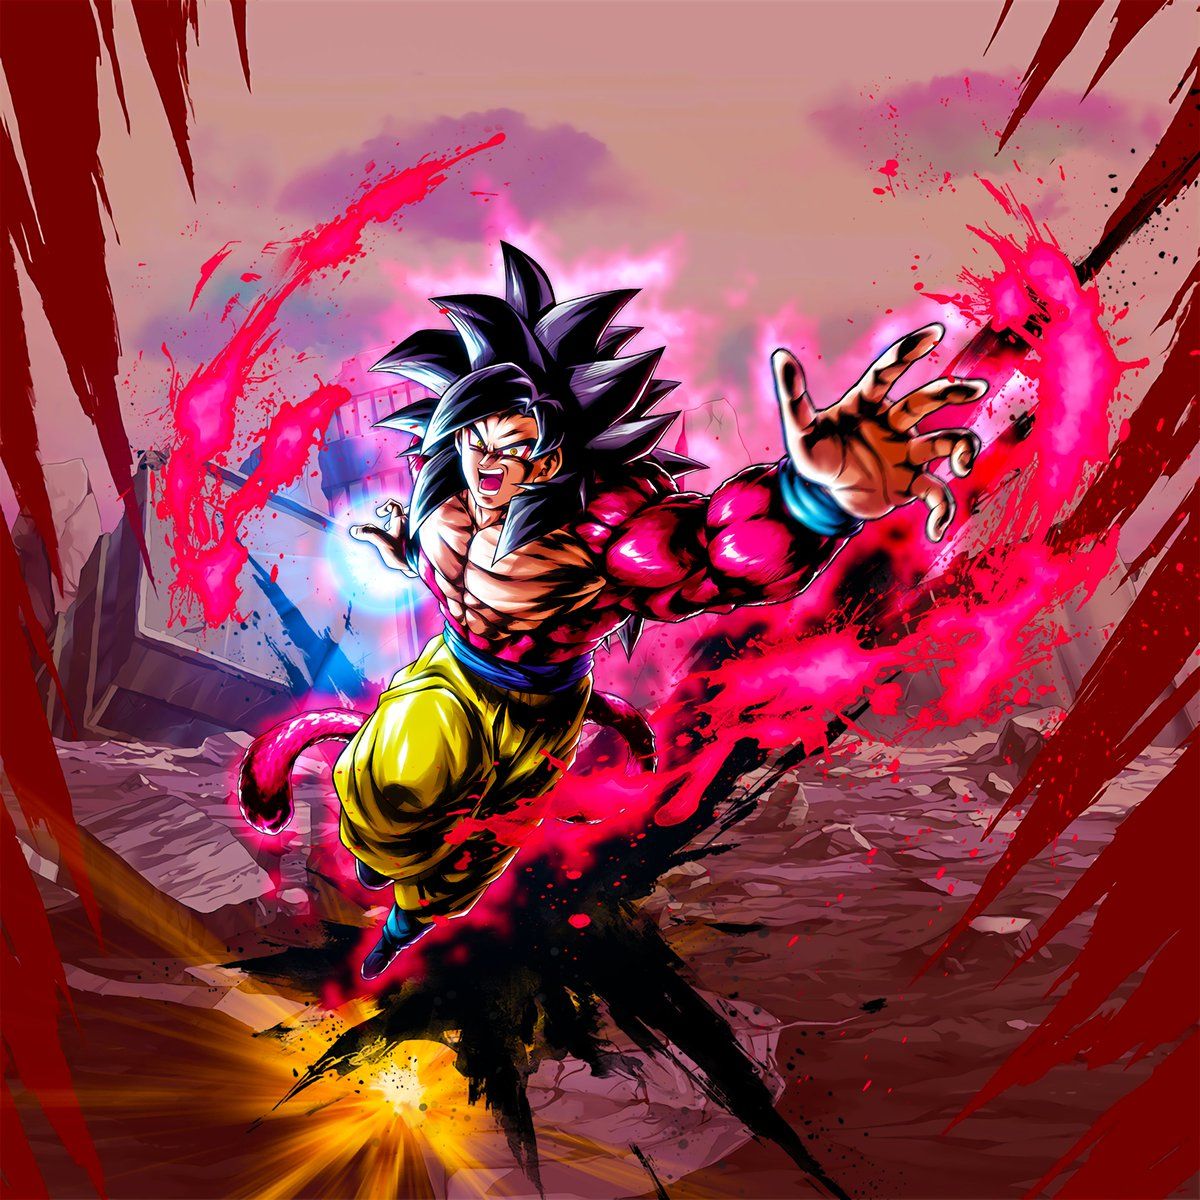 Hydros Full Power Saiyan 4 Goku Character Art + 4K PC Wallpaper + 4k Phone Wallpaper! #DBLegends #DragonBallLegends